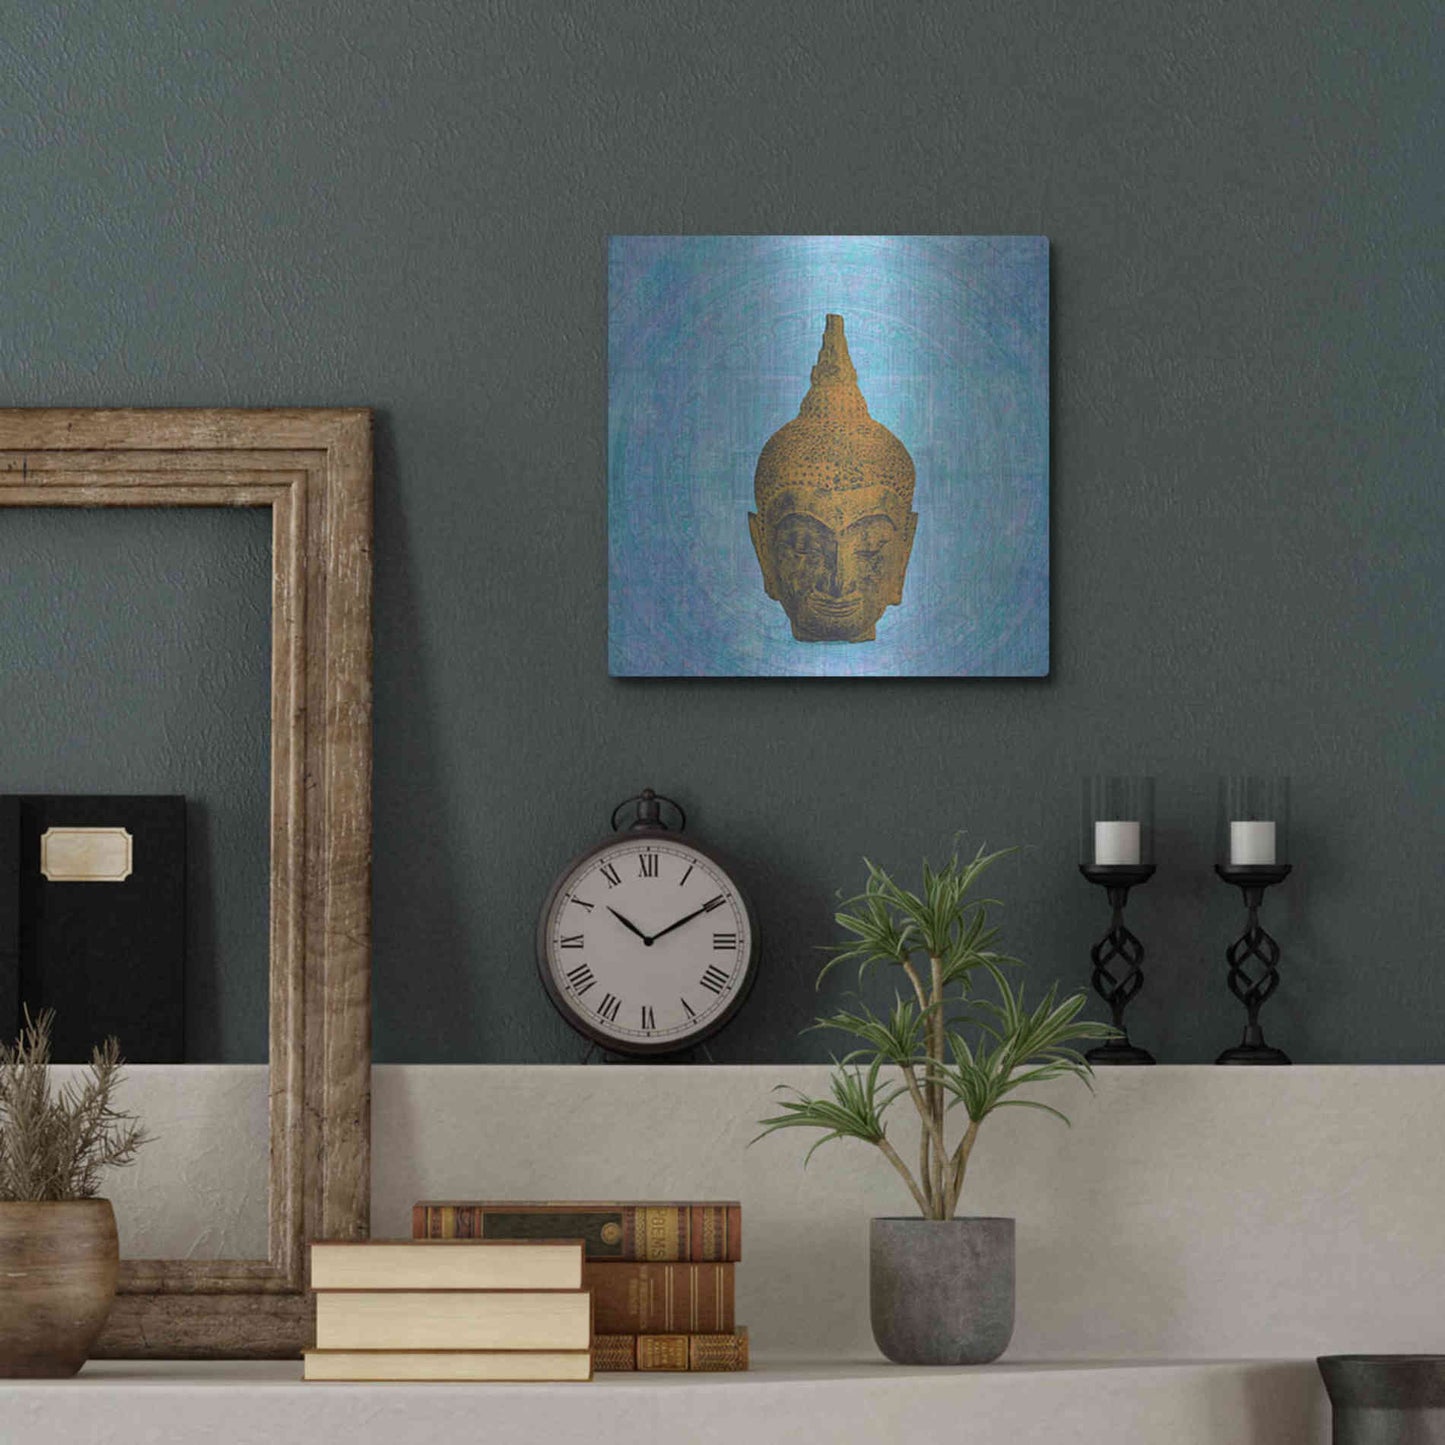 Luxe Metal Art 'Buddha on Blue' by Elena Ray, Metal Wall Art,12x12